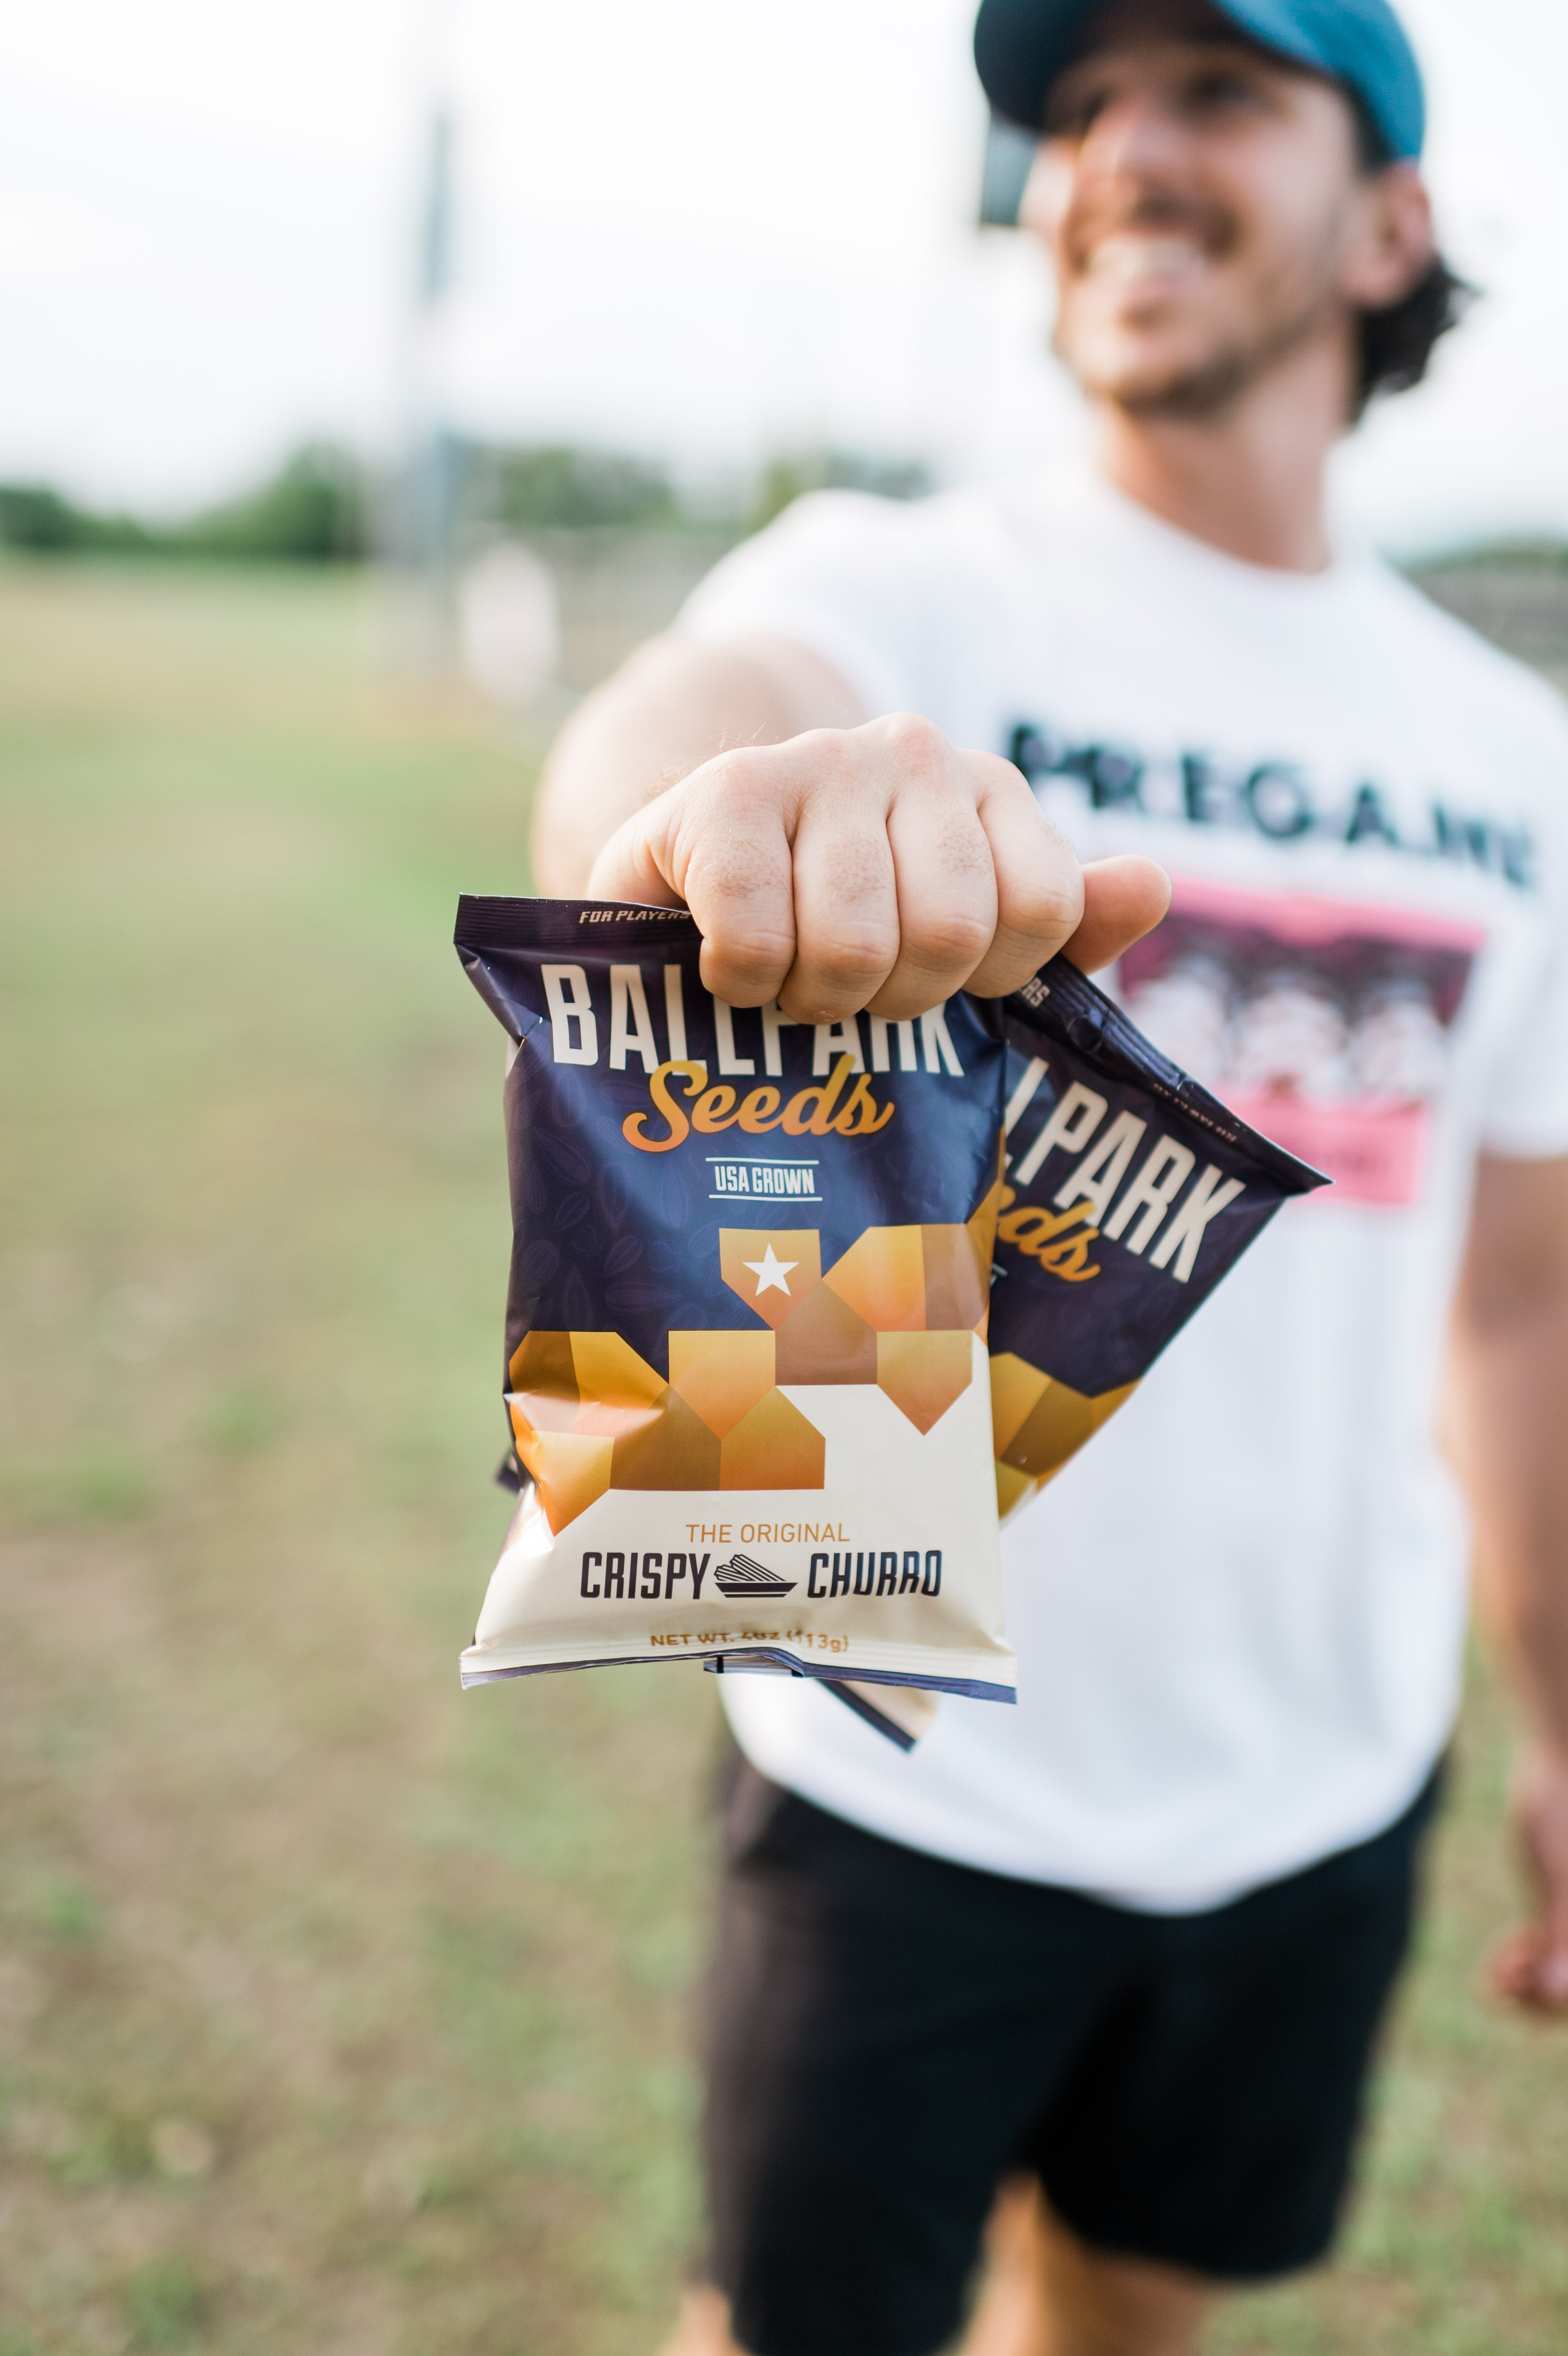 Two bags of Crispy Churro Ballpark Seeds